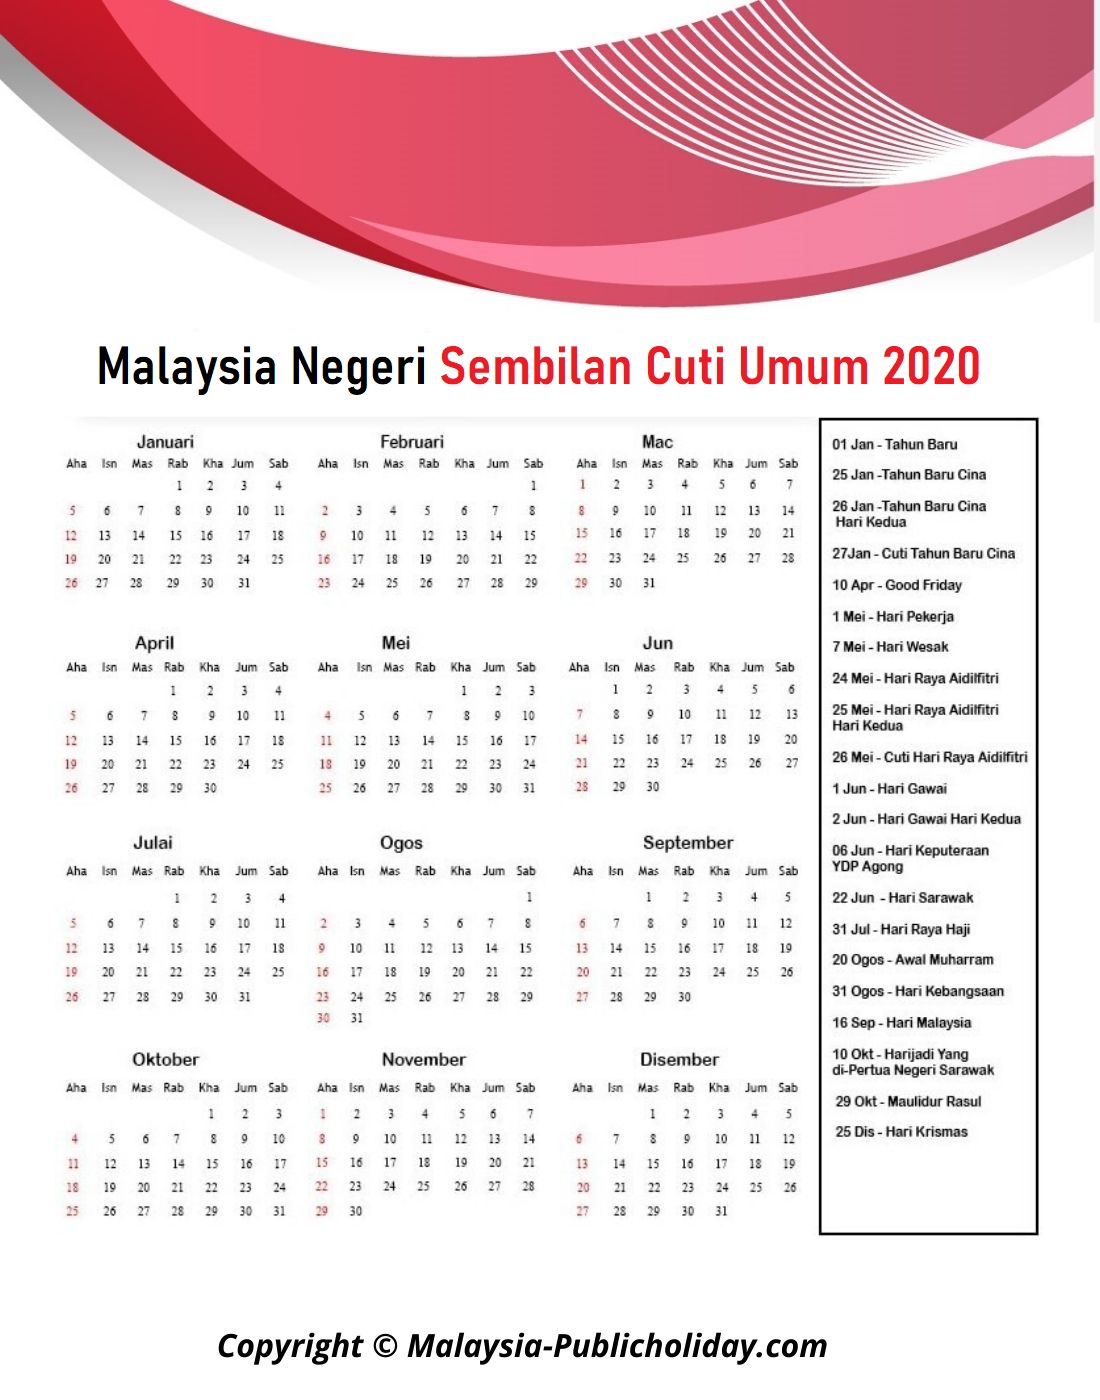 Kalendar Negeri Sembilan 2020 Malaysia